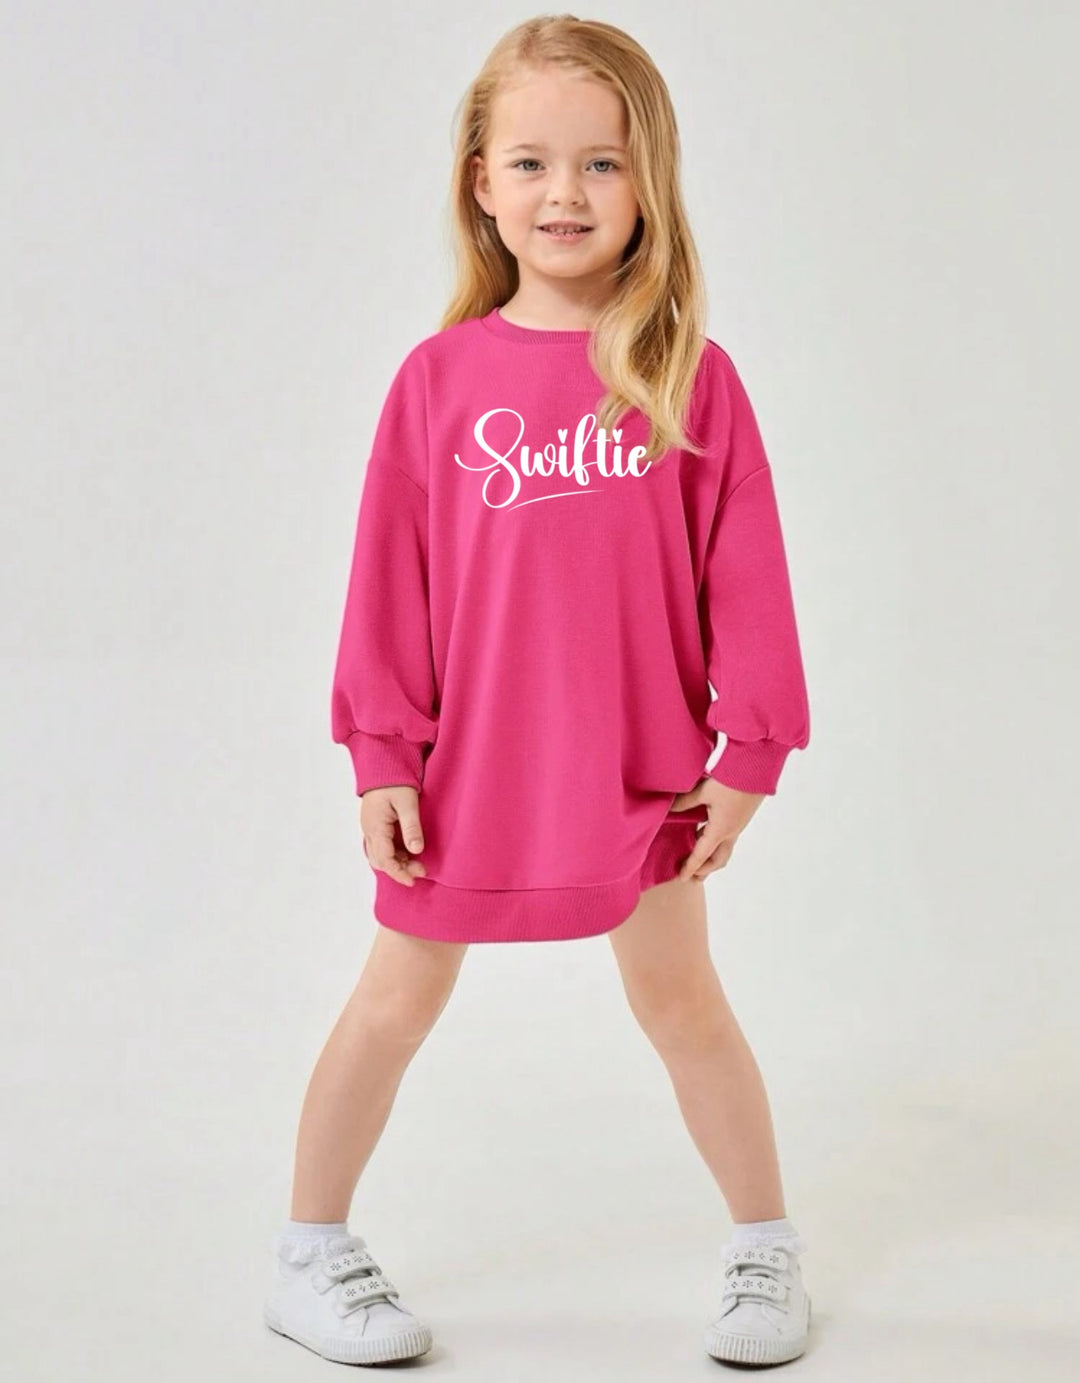 Swiftie hot pink pullover dress